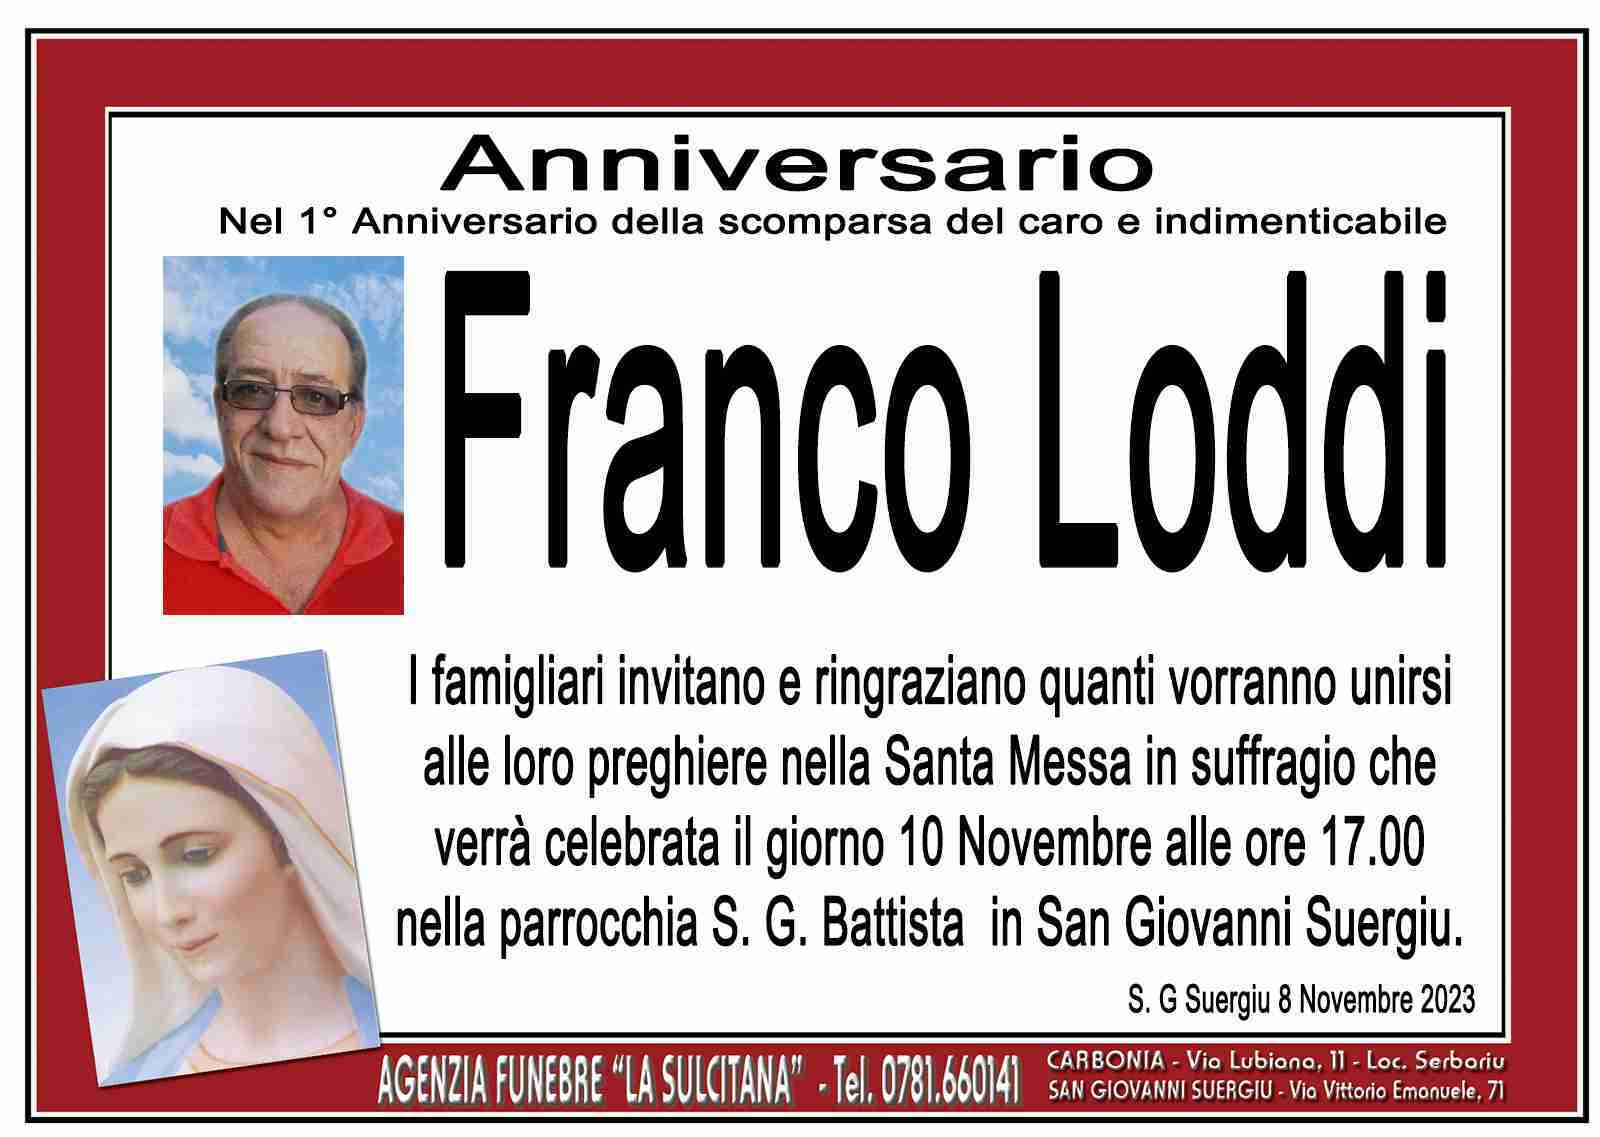 Franco Loddi